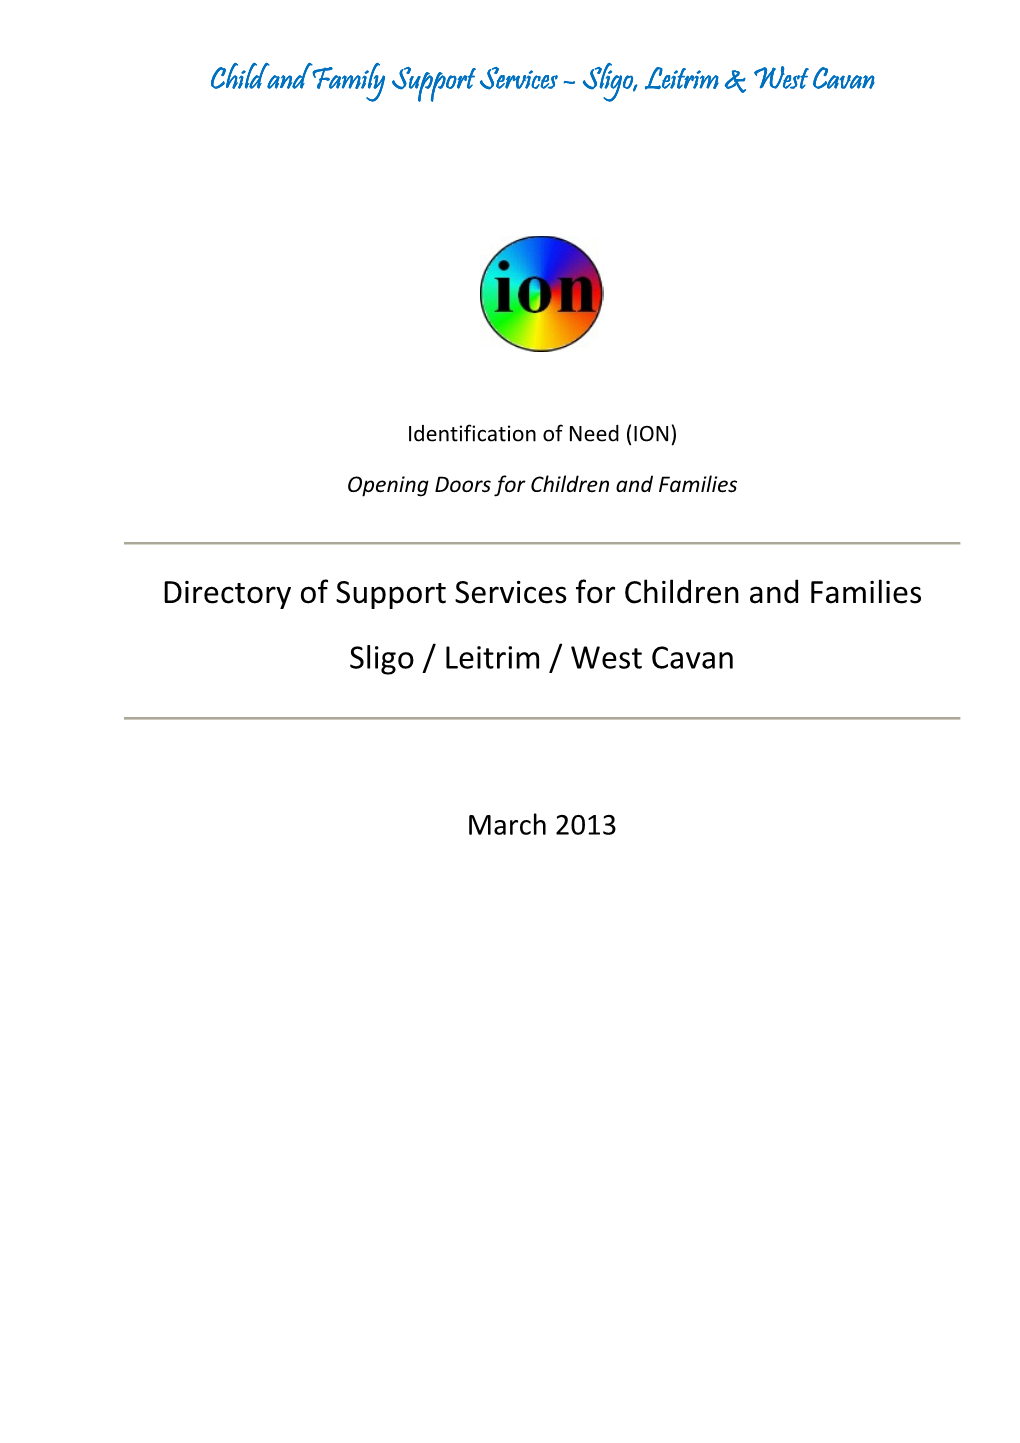 Directory of Support Services for Children and Families Sligo / Leitrim / West Cavan